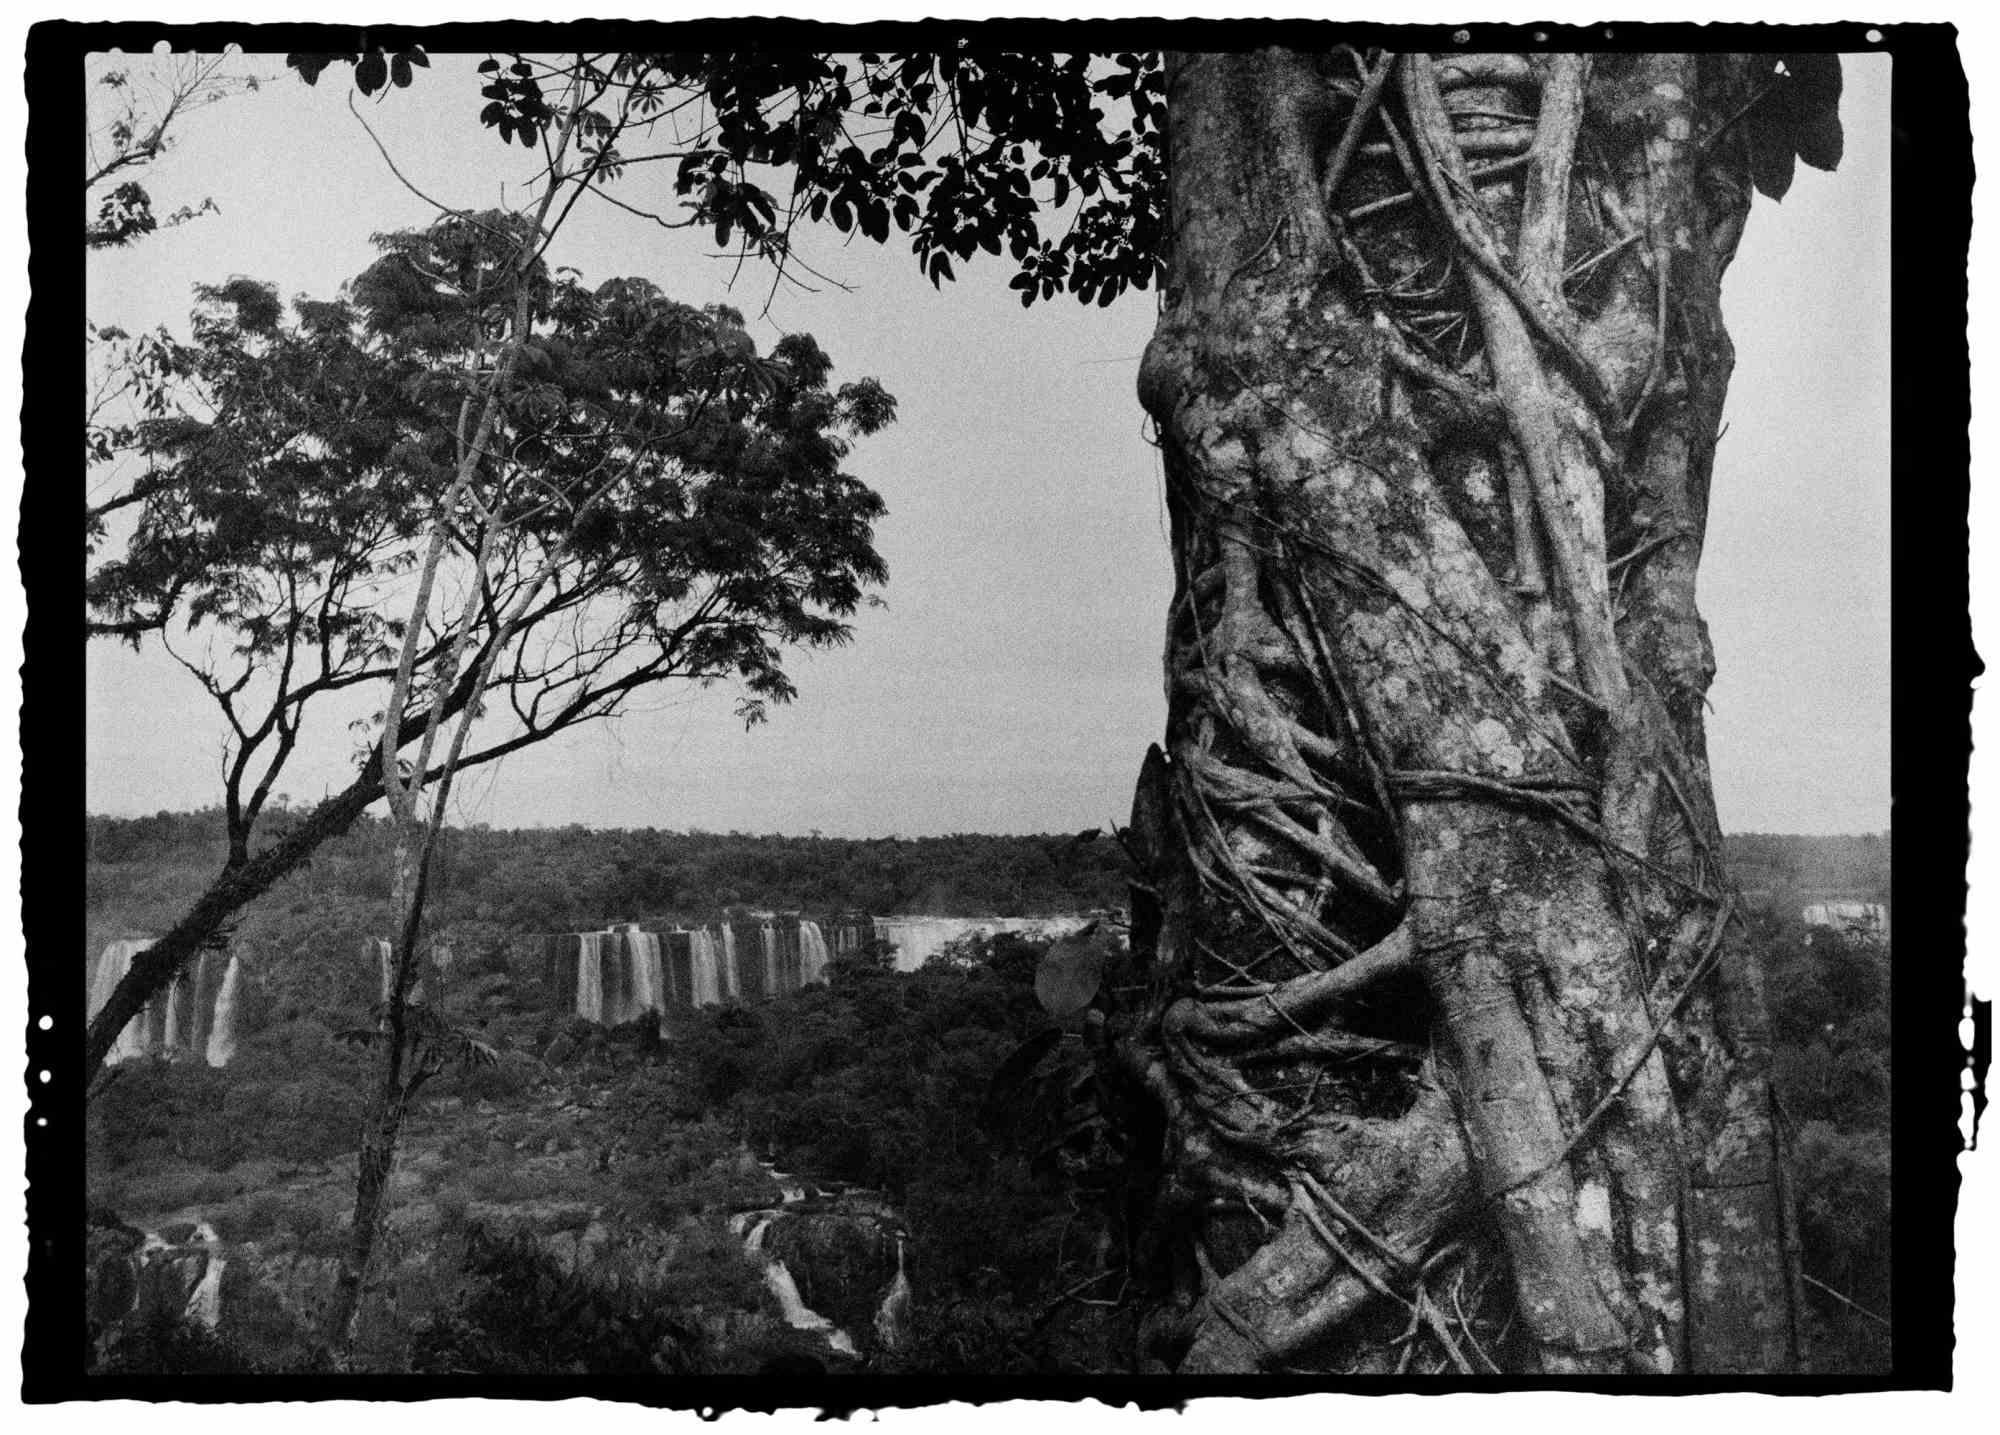 Iguazu 110 - Photograph By Roberto Vignoli - 2007